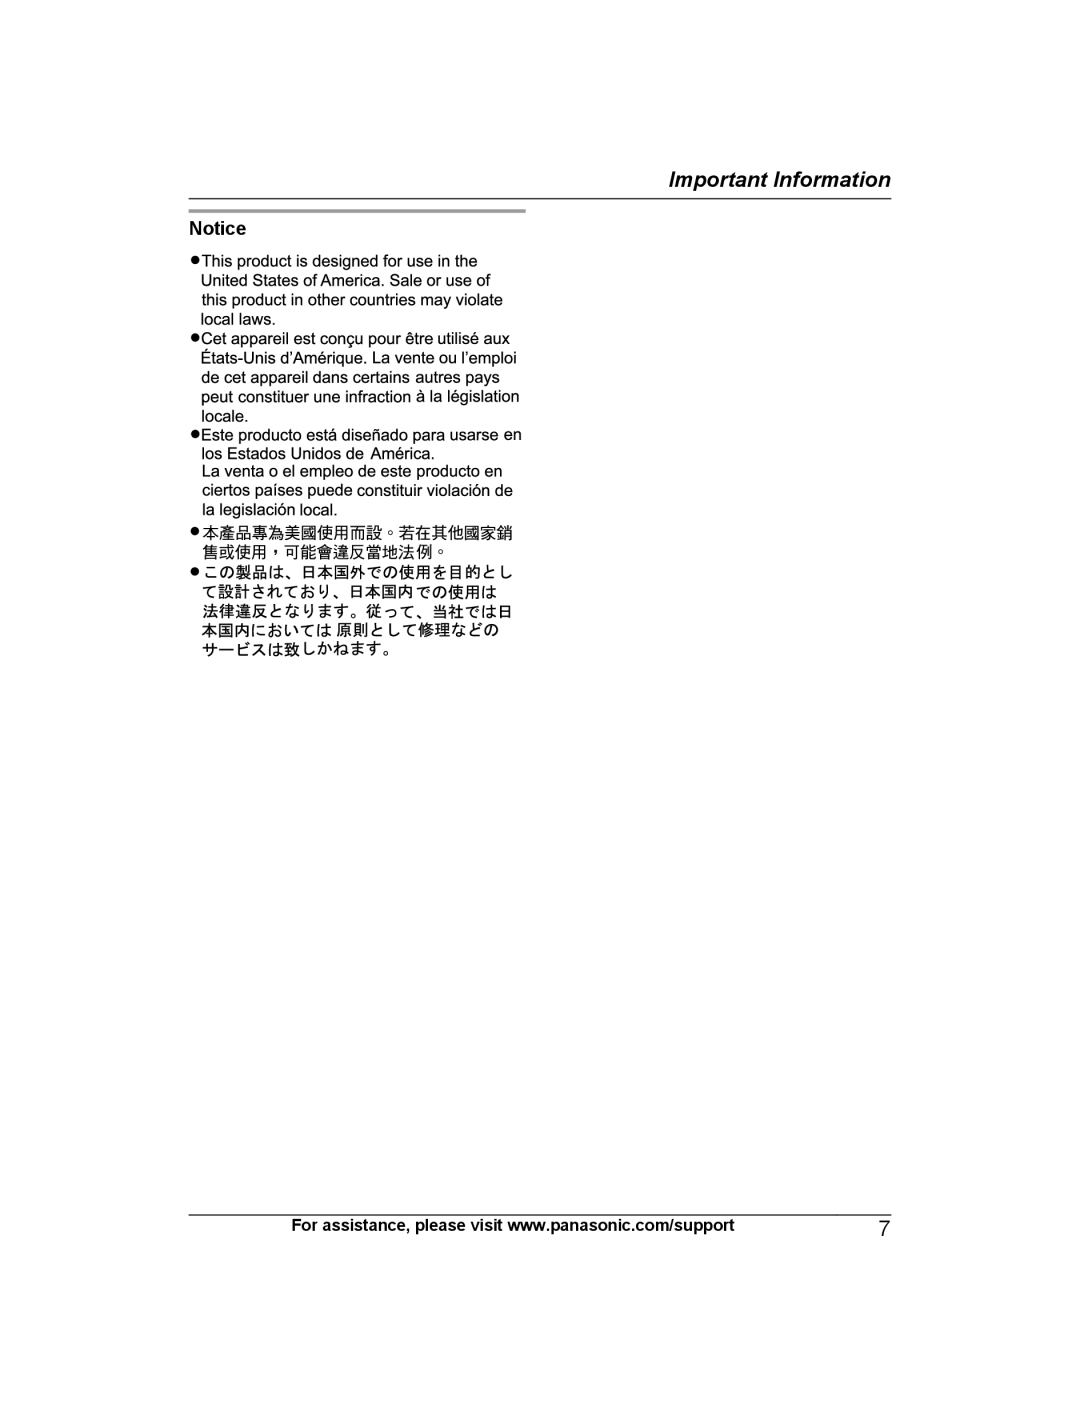 Panasonic KX-HNC600 manual Important Information 